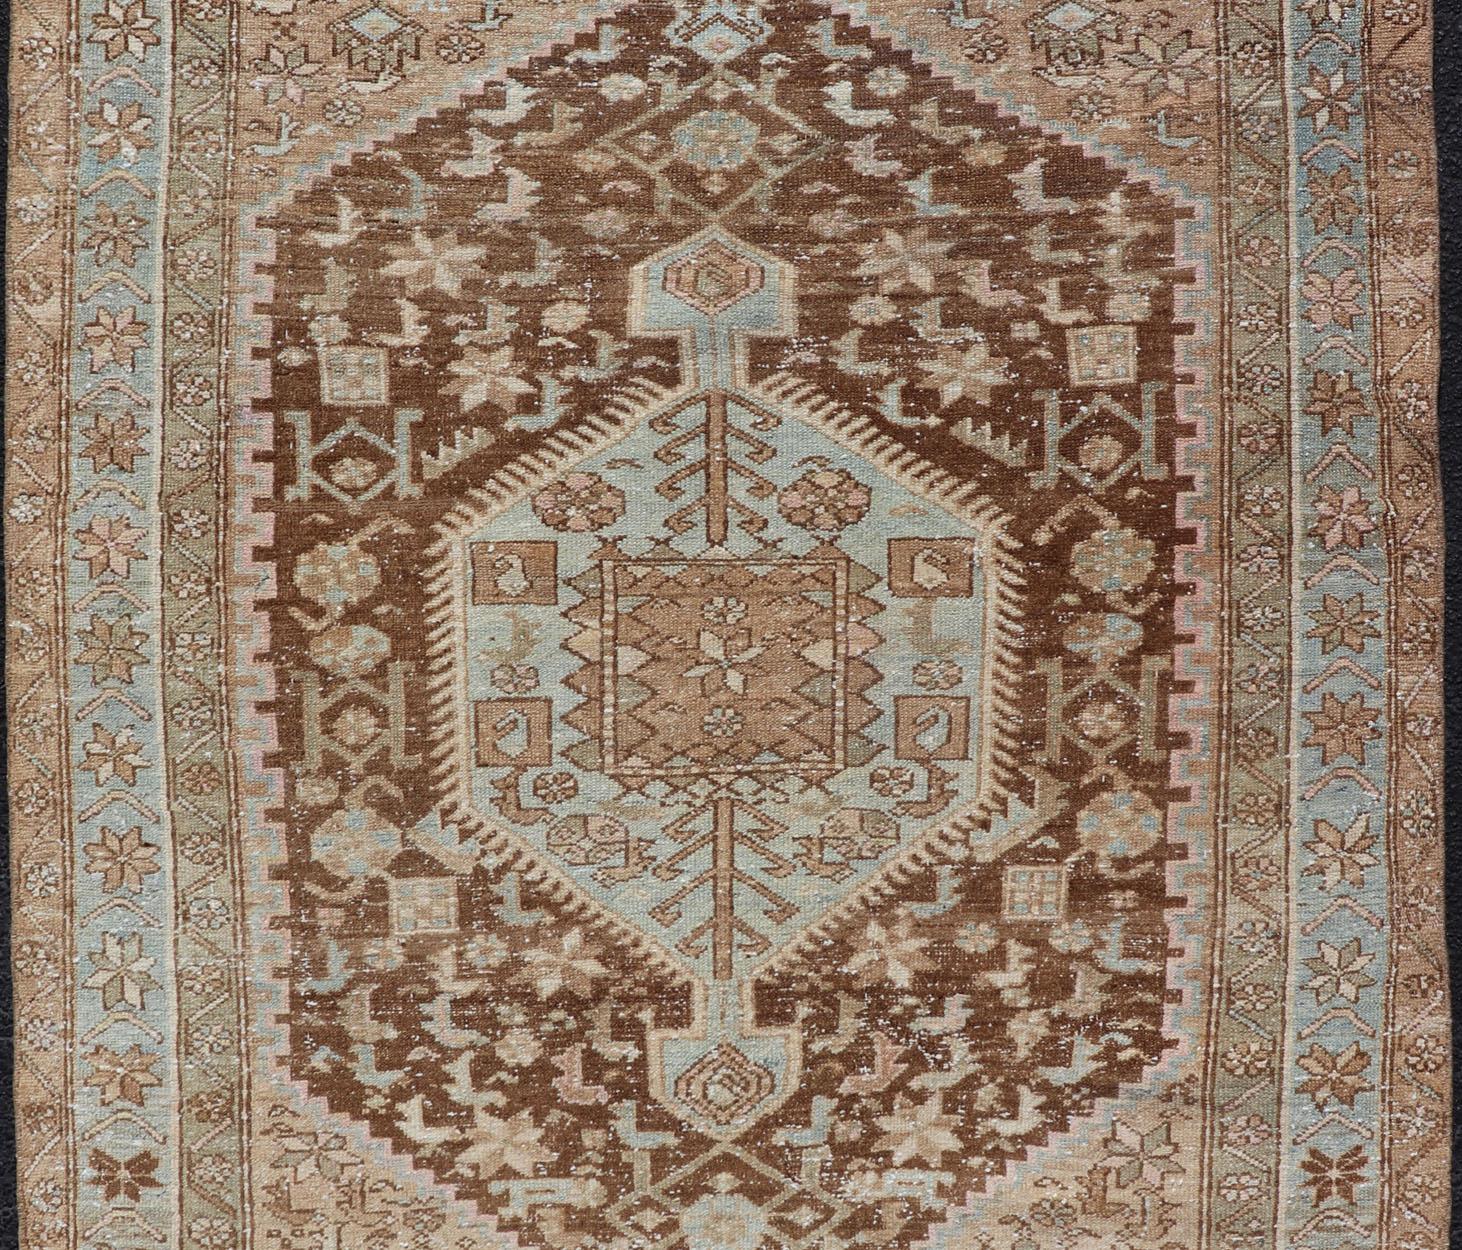 All-over Persian Earth toned vintage malayer rug
Floral medallion design malayer vintage rug in brown and light grayish-blue color tones, Keivan Woven Arts / rug EMB-9512-P13086, origin / type: Iran / Hamedan, circa 1930

This beautiful vintage